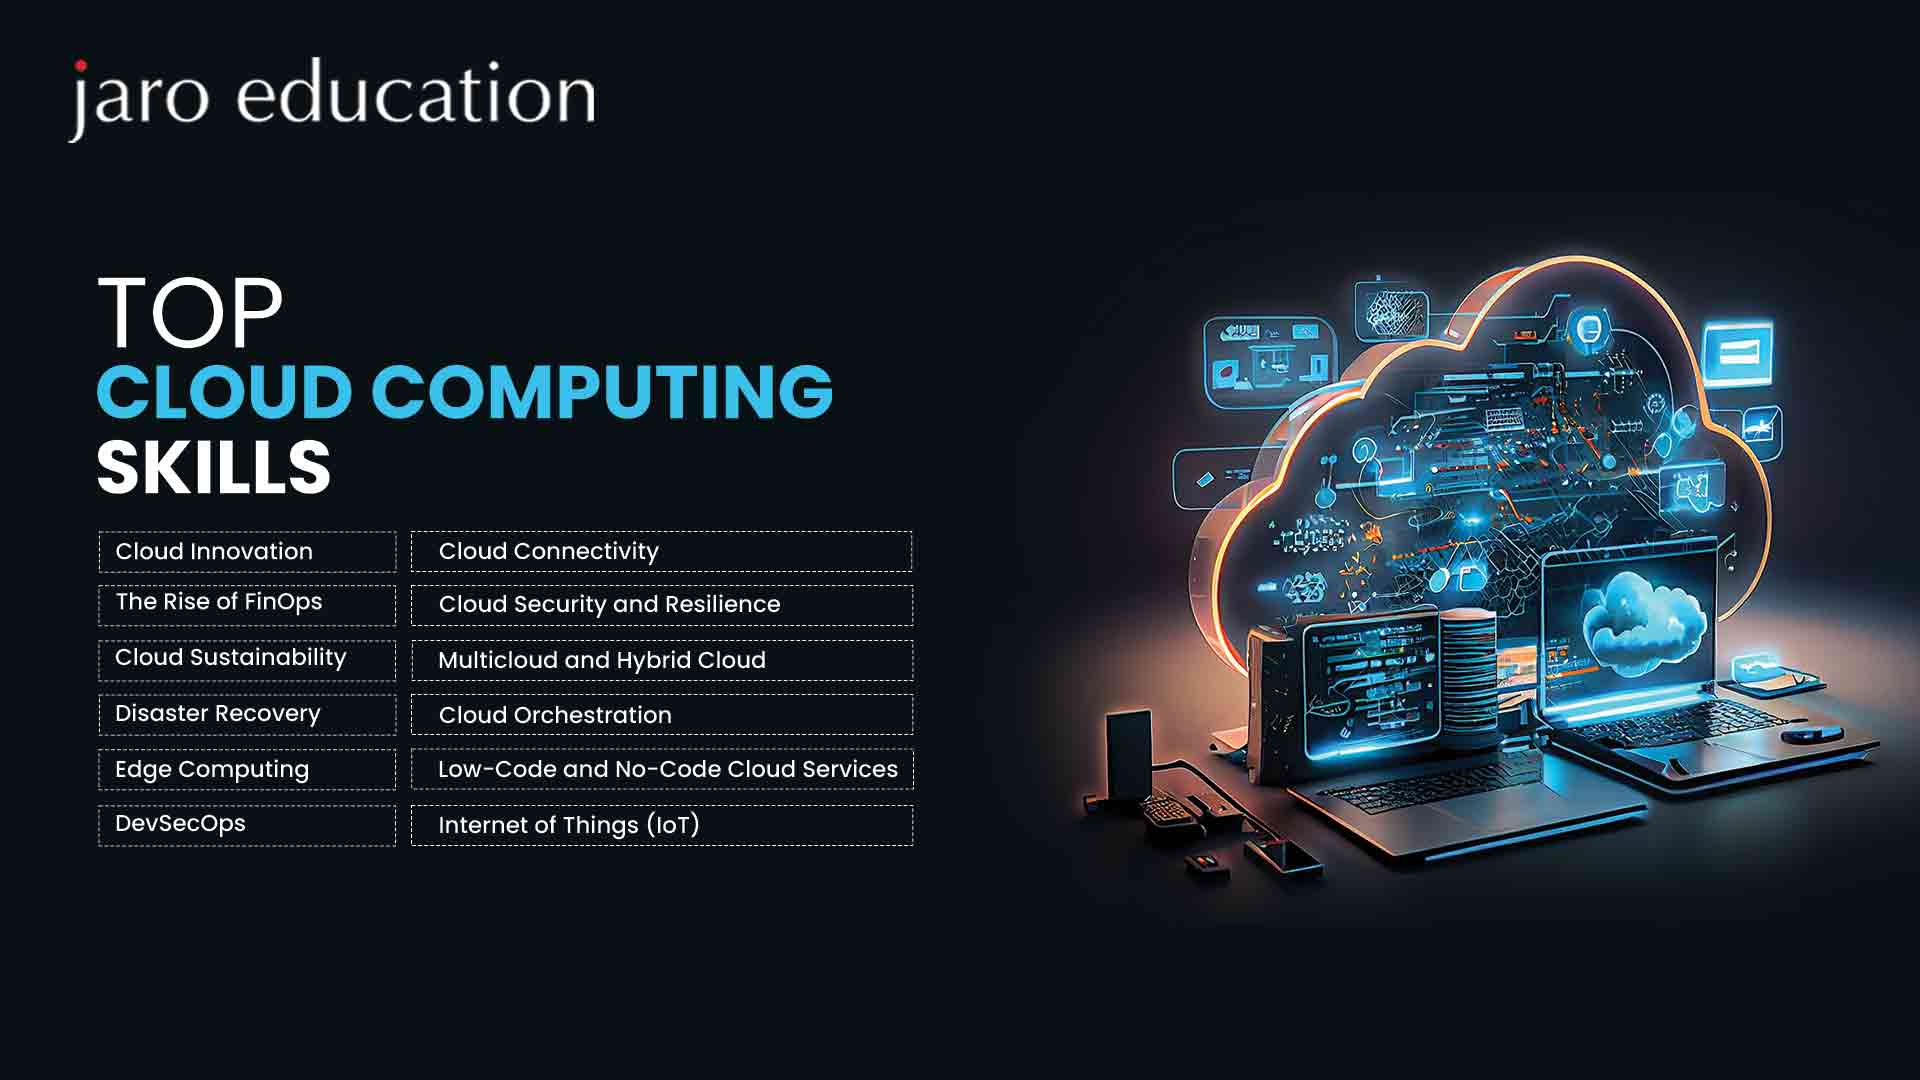 Top cloud computing skills